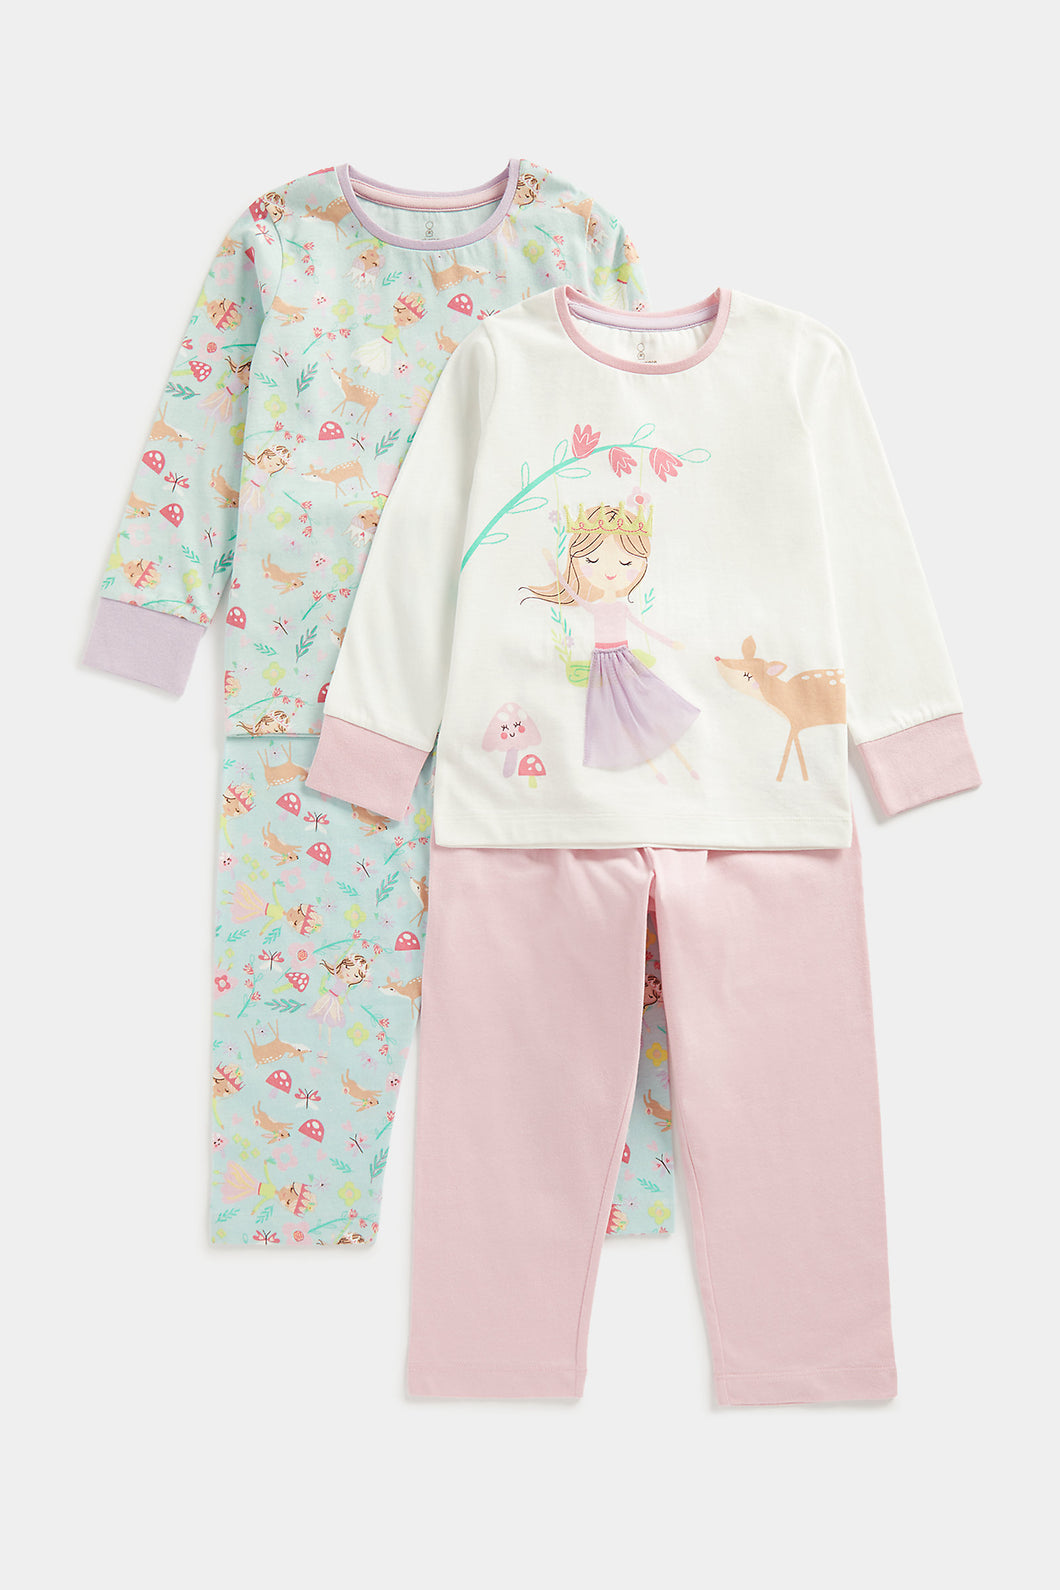 Mothercare Princess Pyjamas - 2 Pack